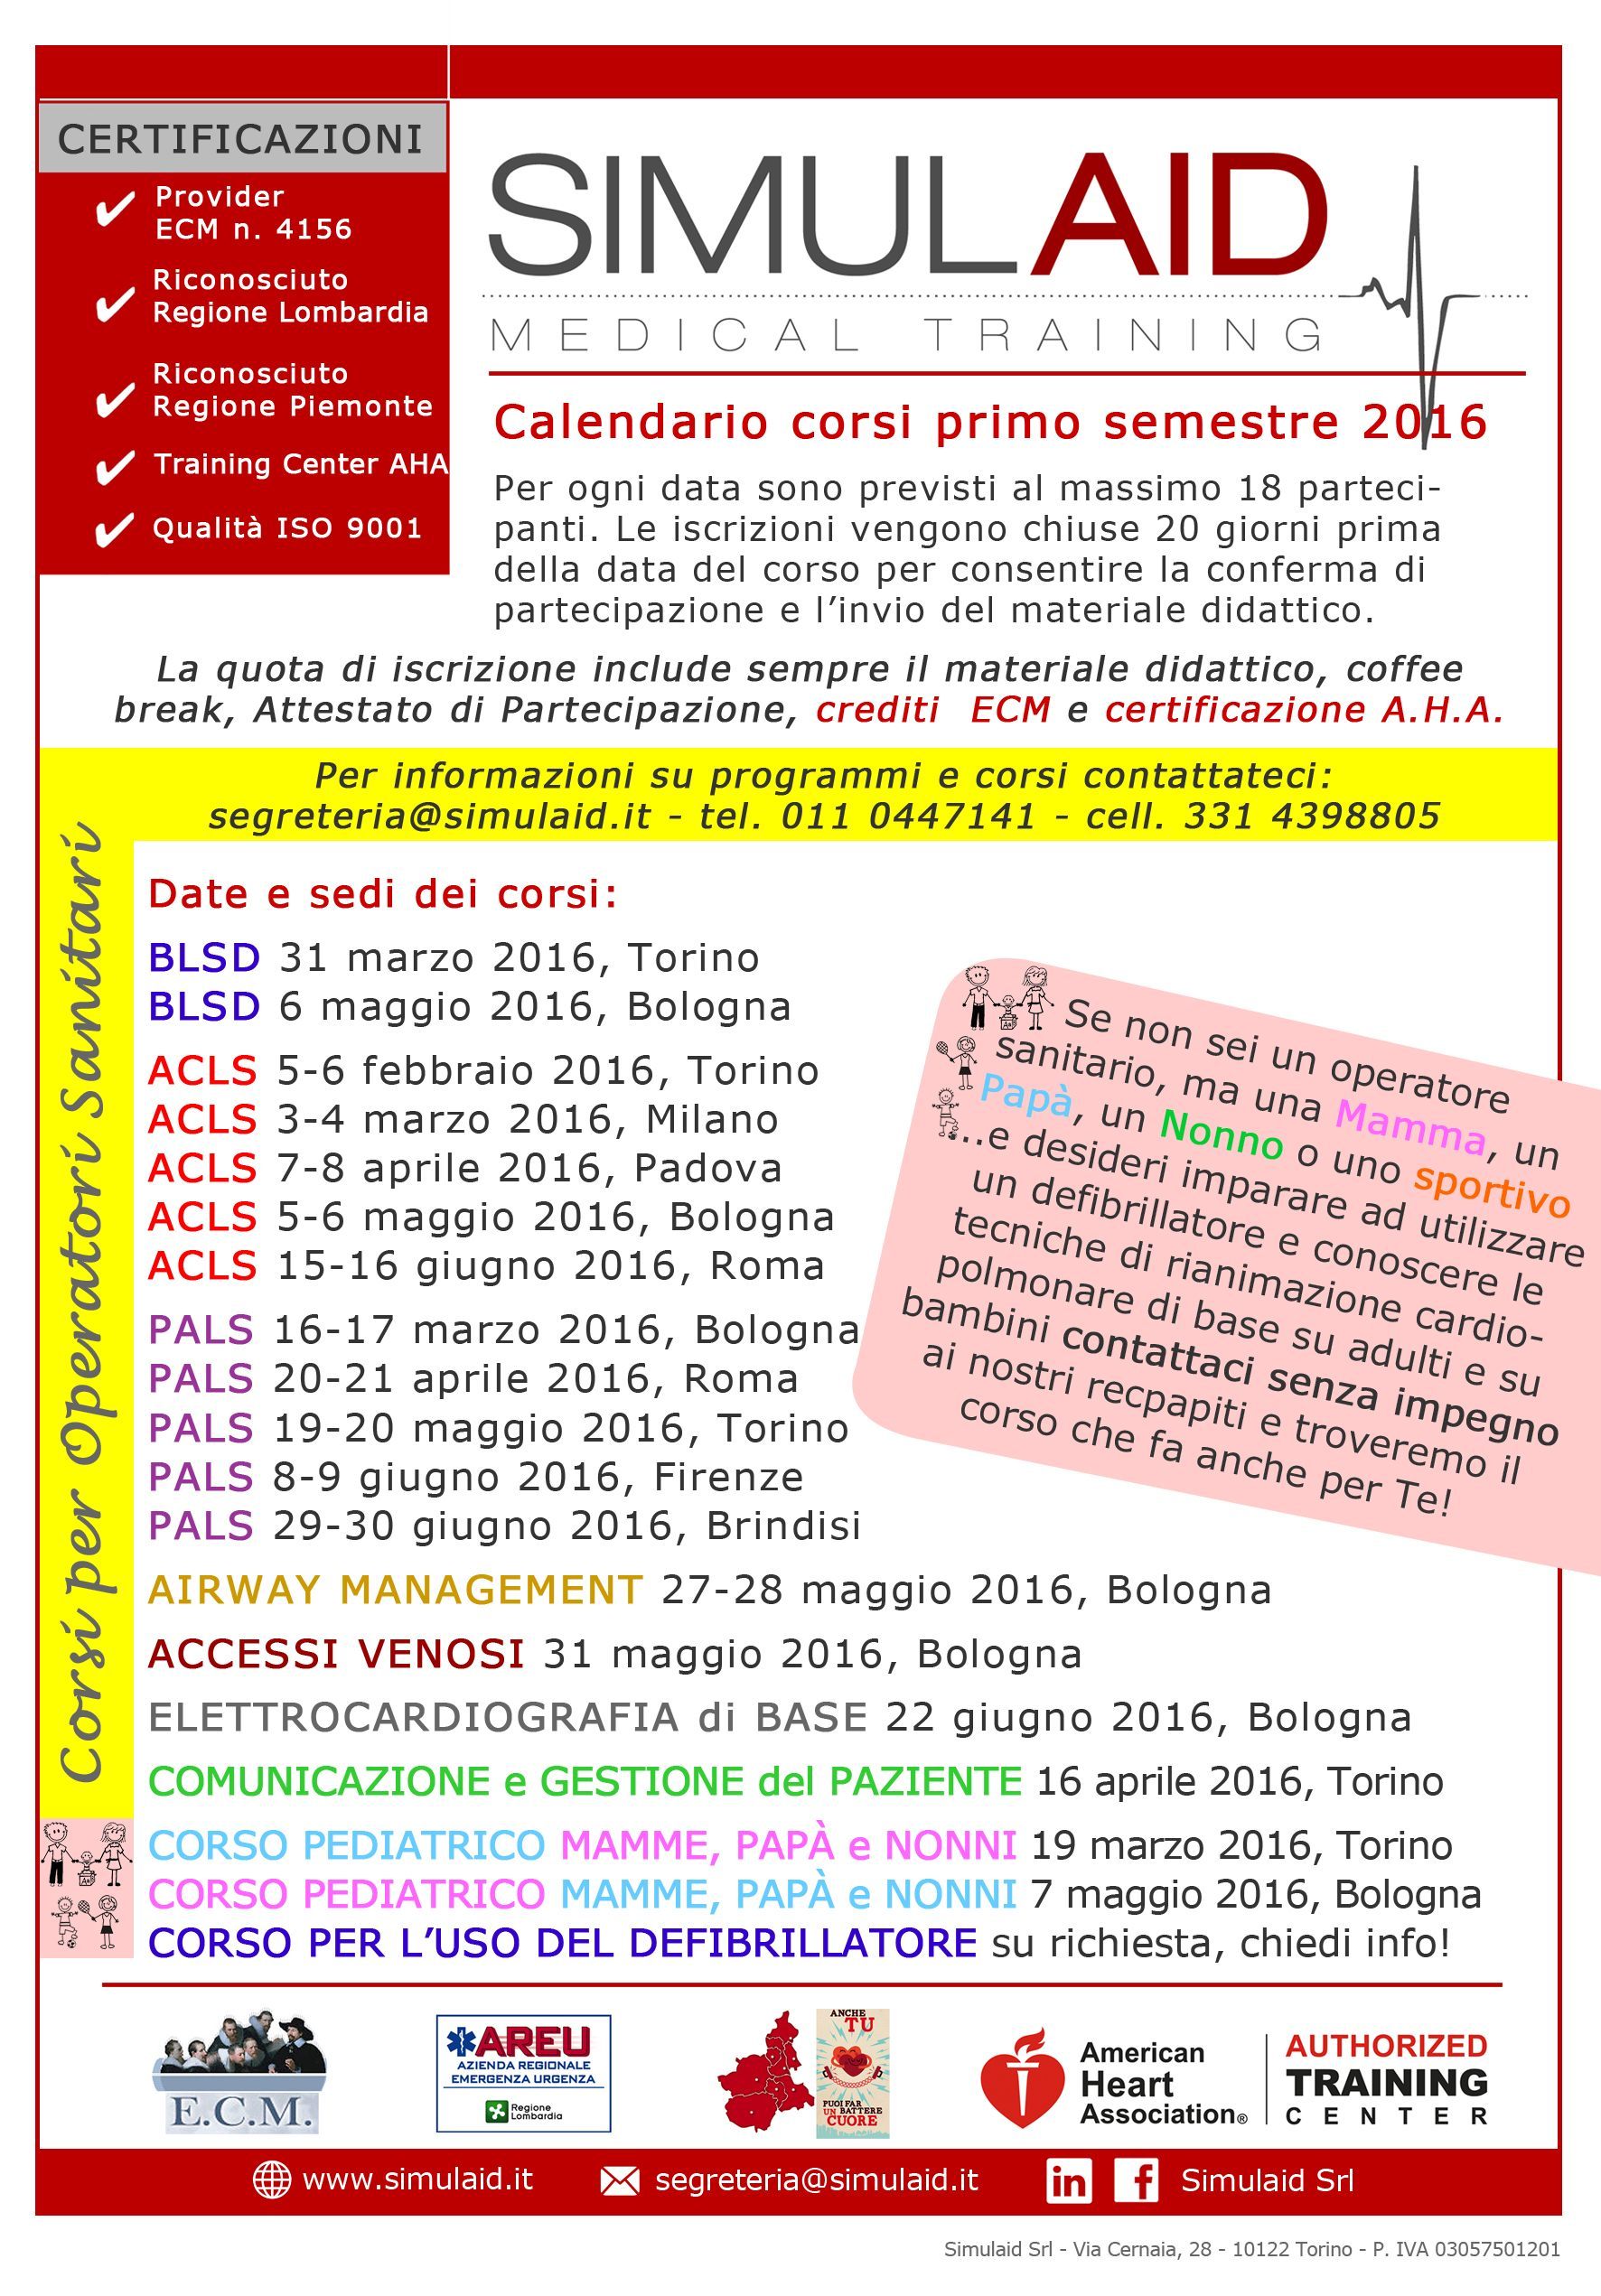 Calendario corsi Simulaid AHA 2015